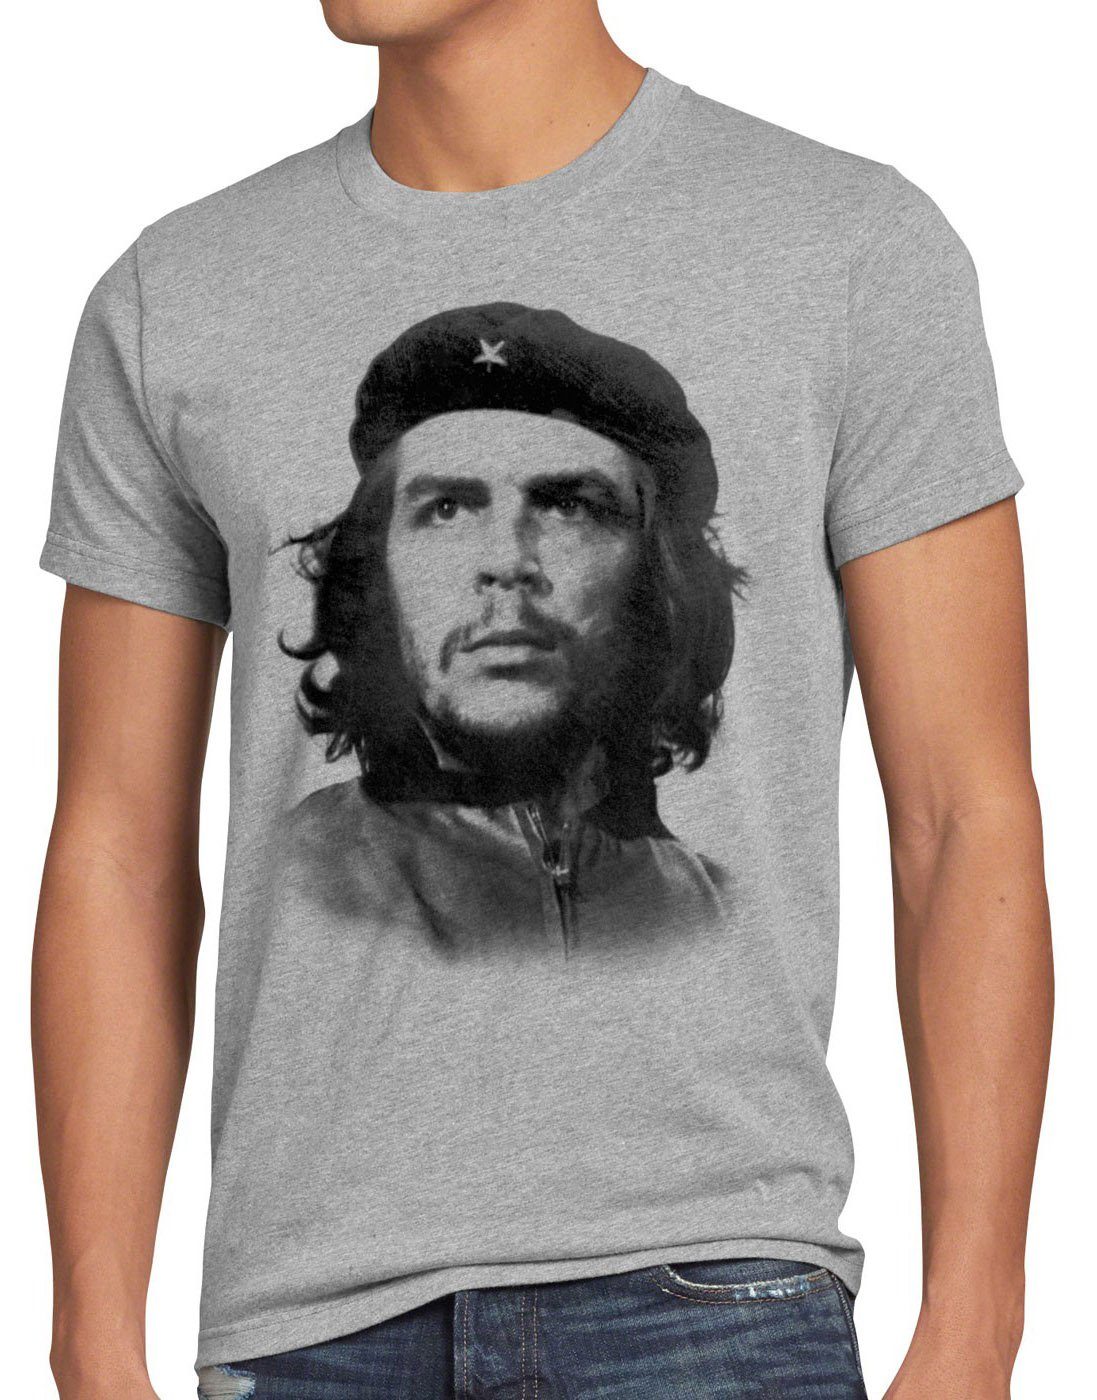 style3 Print-Shirt Herren T-Shirt CHE Guevara Foto cuba kuba revolution Havana Kommunismus castro grau meliert